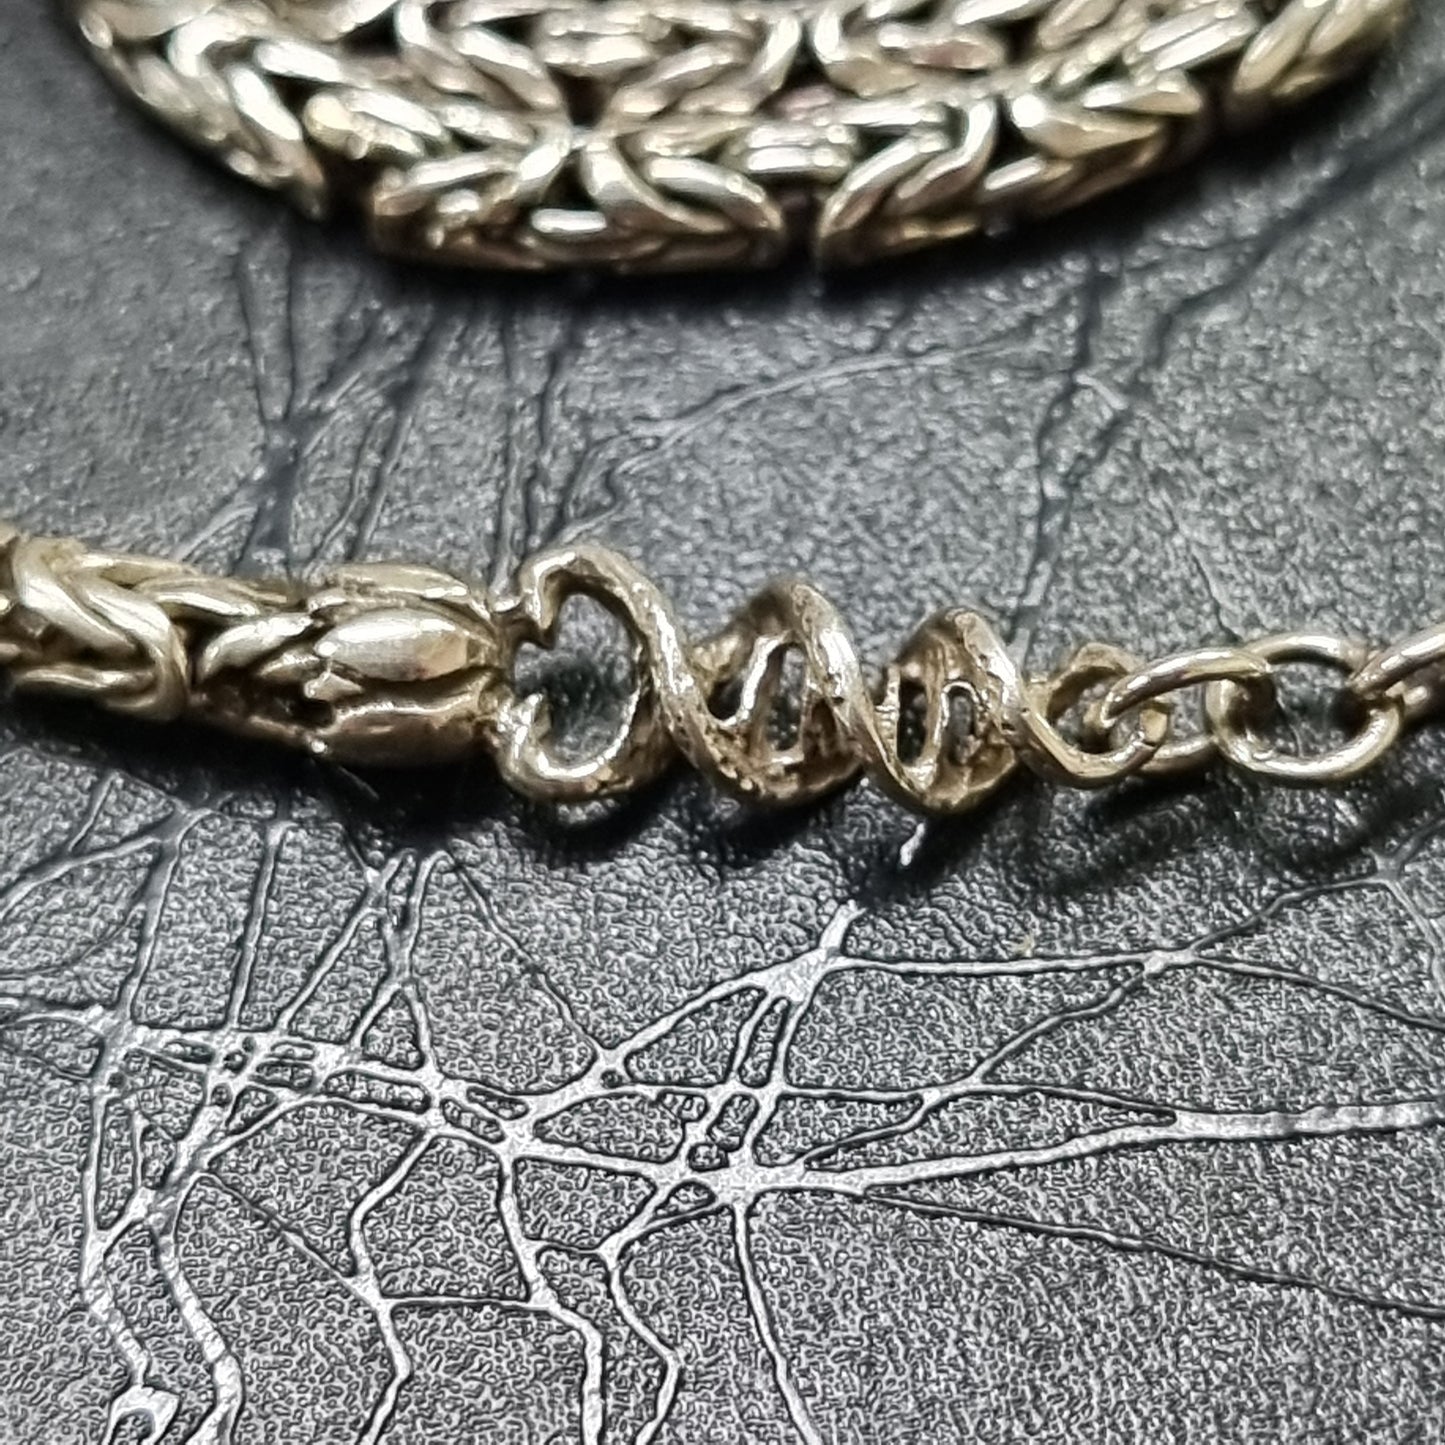 Byzantine Chain 3mm Sterling Silver